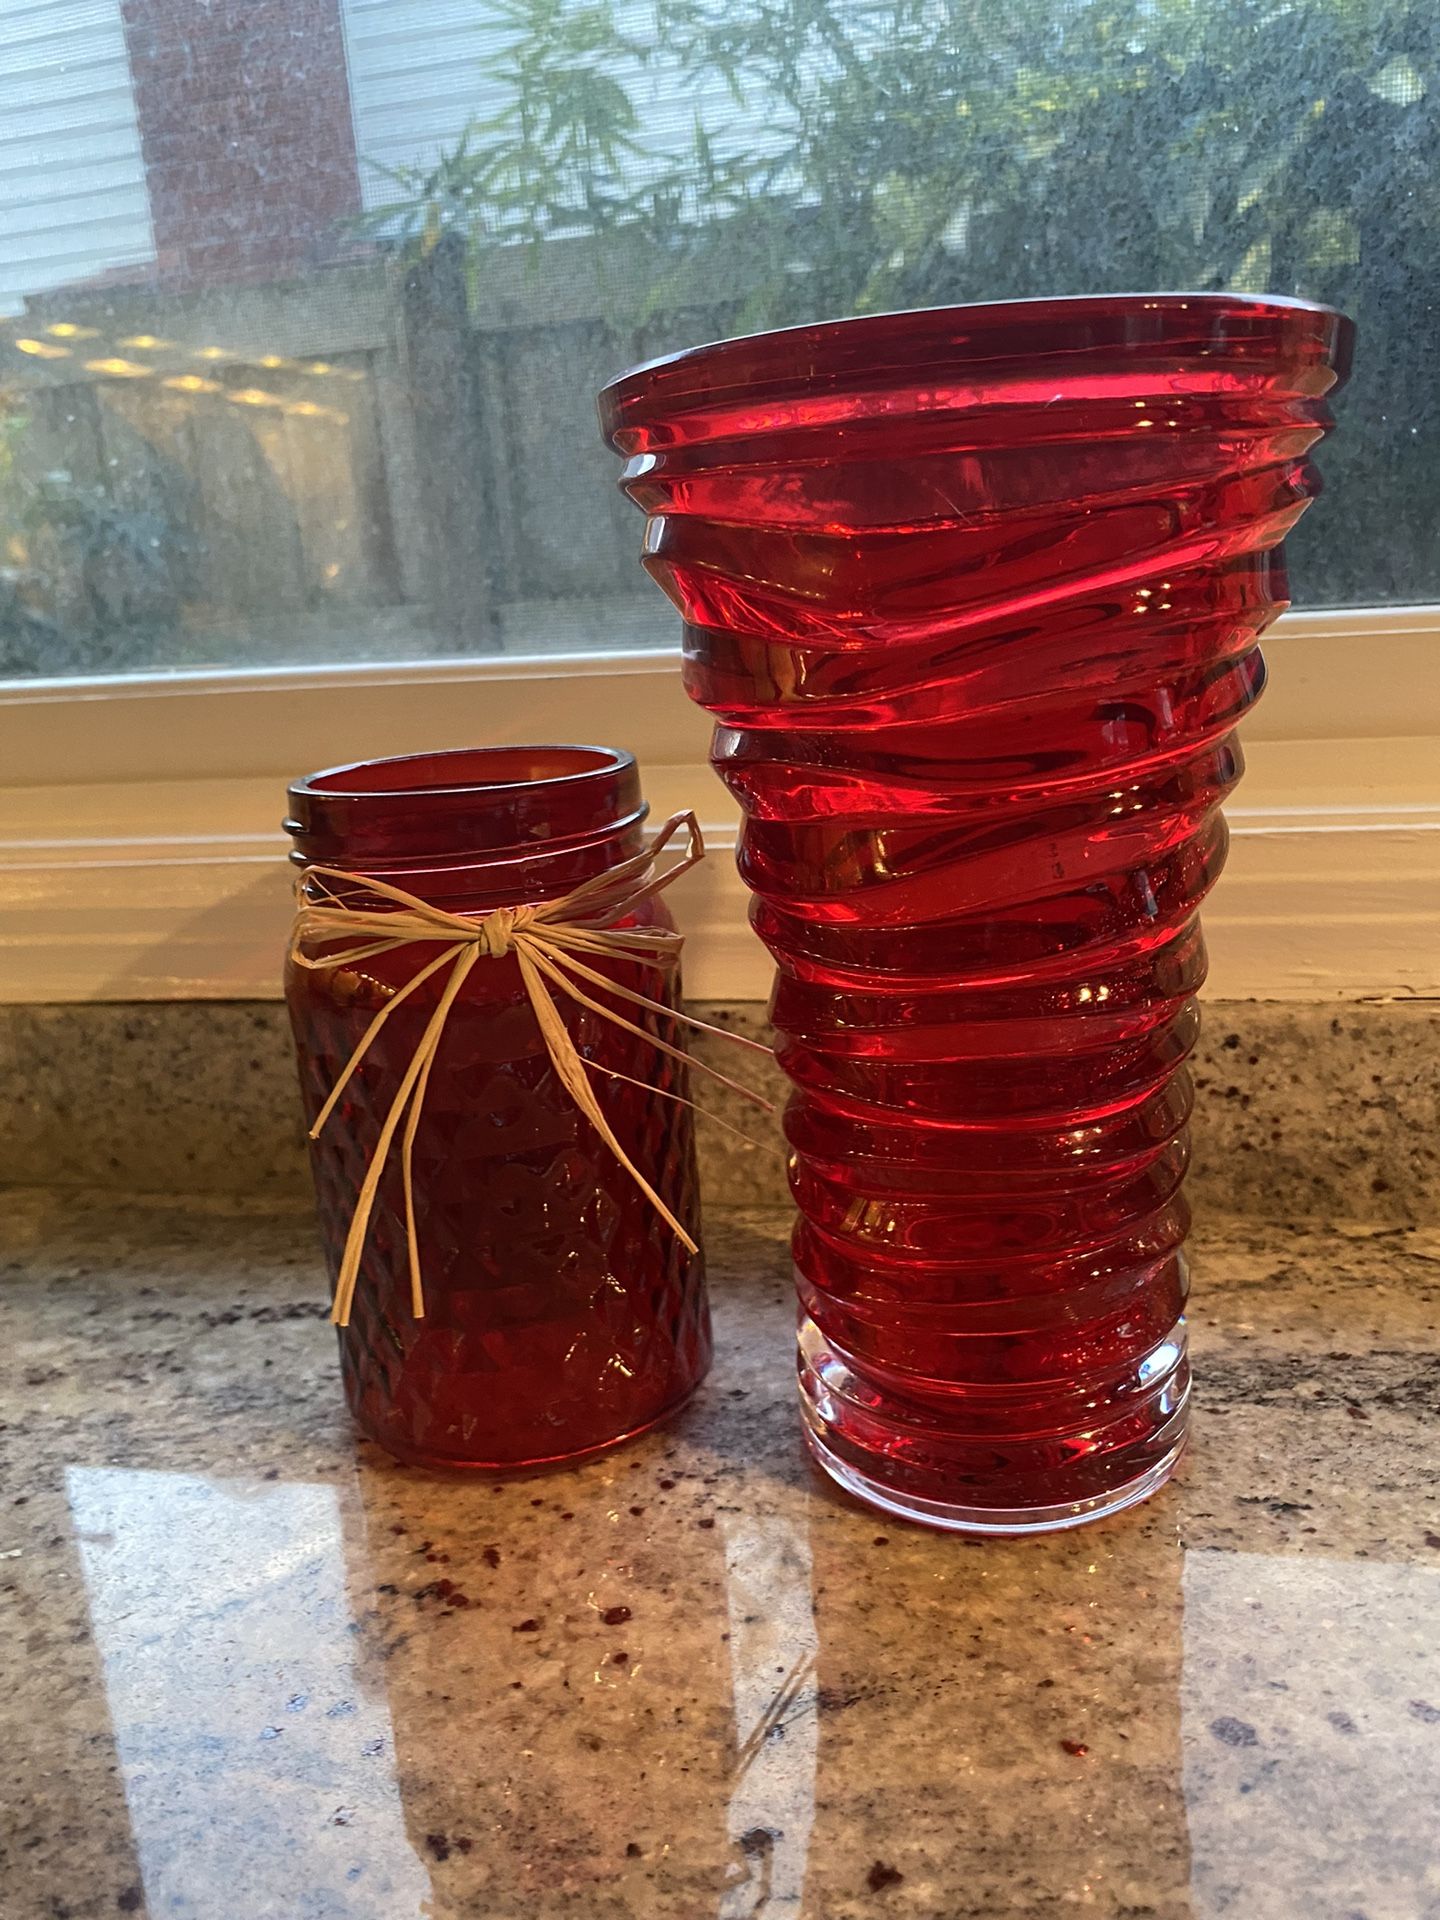 2 Red Vases  Decor - Both $12